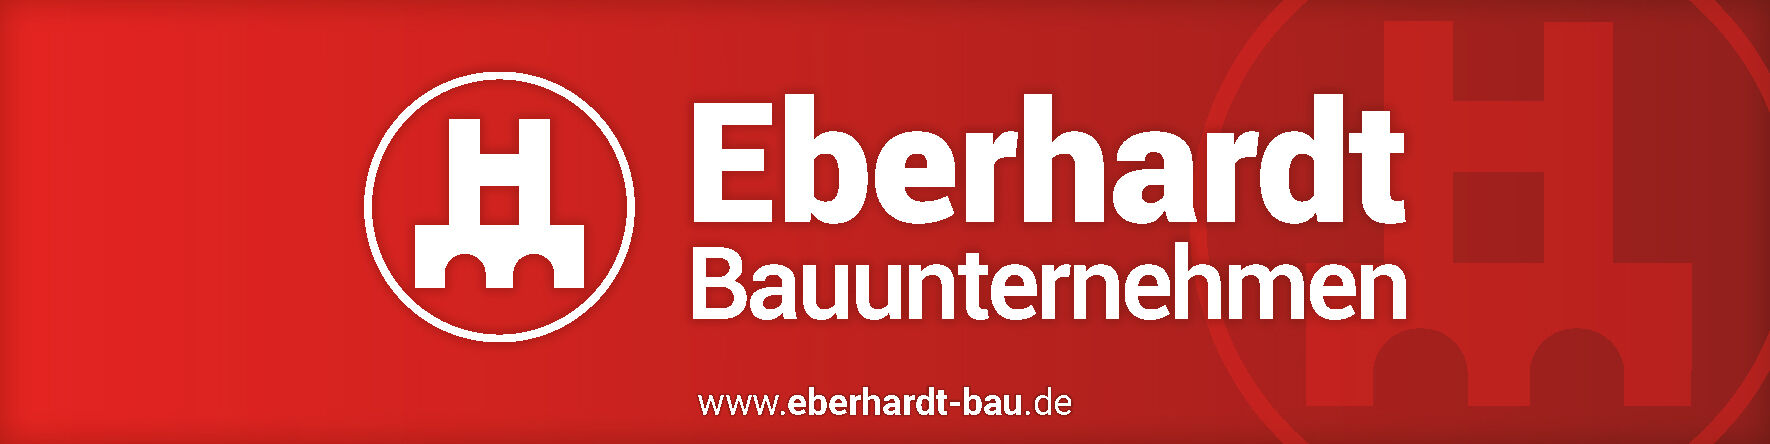 eberhardt-bandenwerbung_01